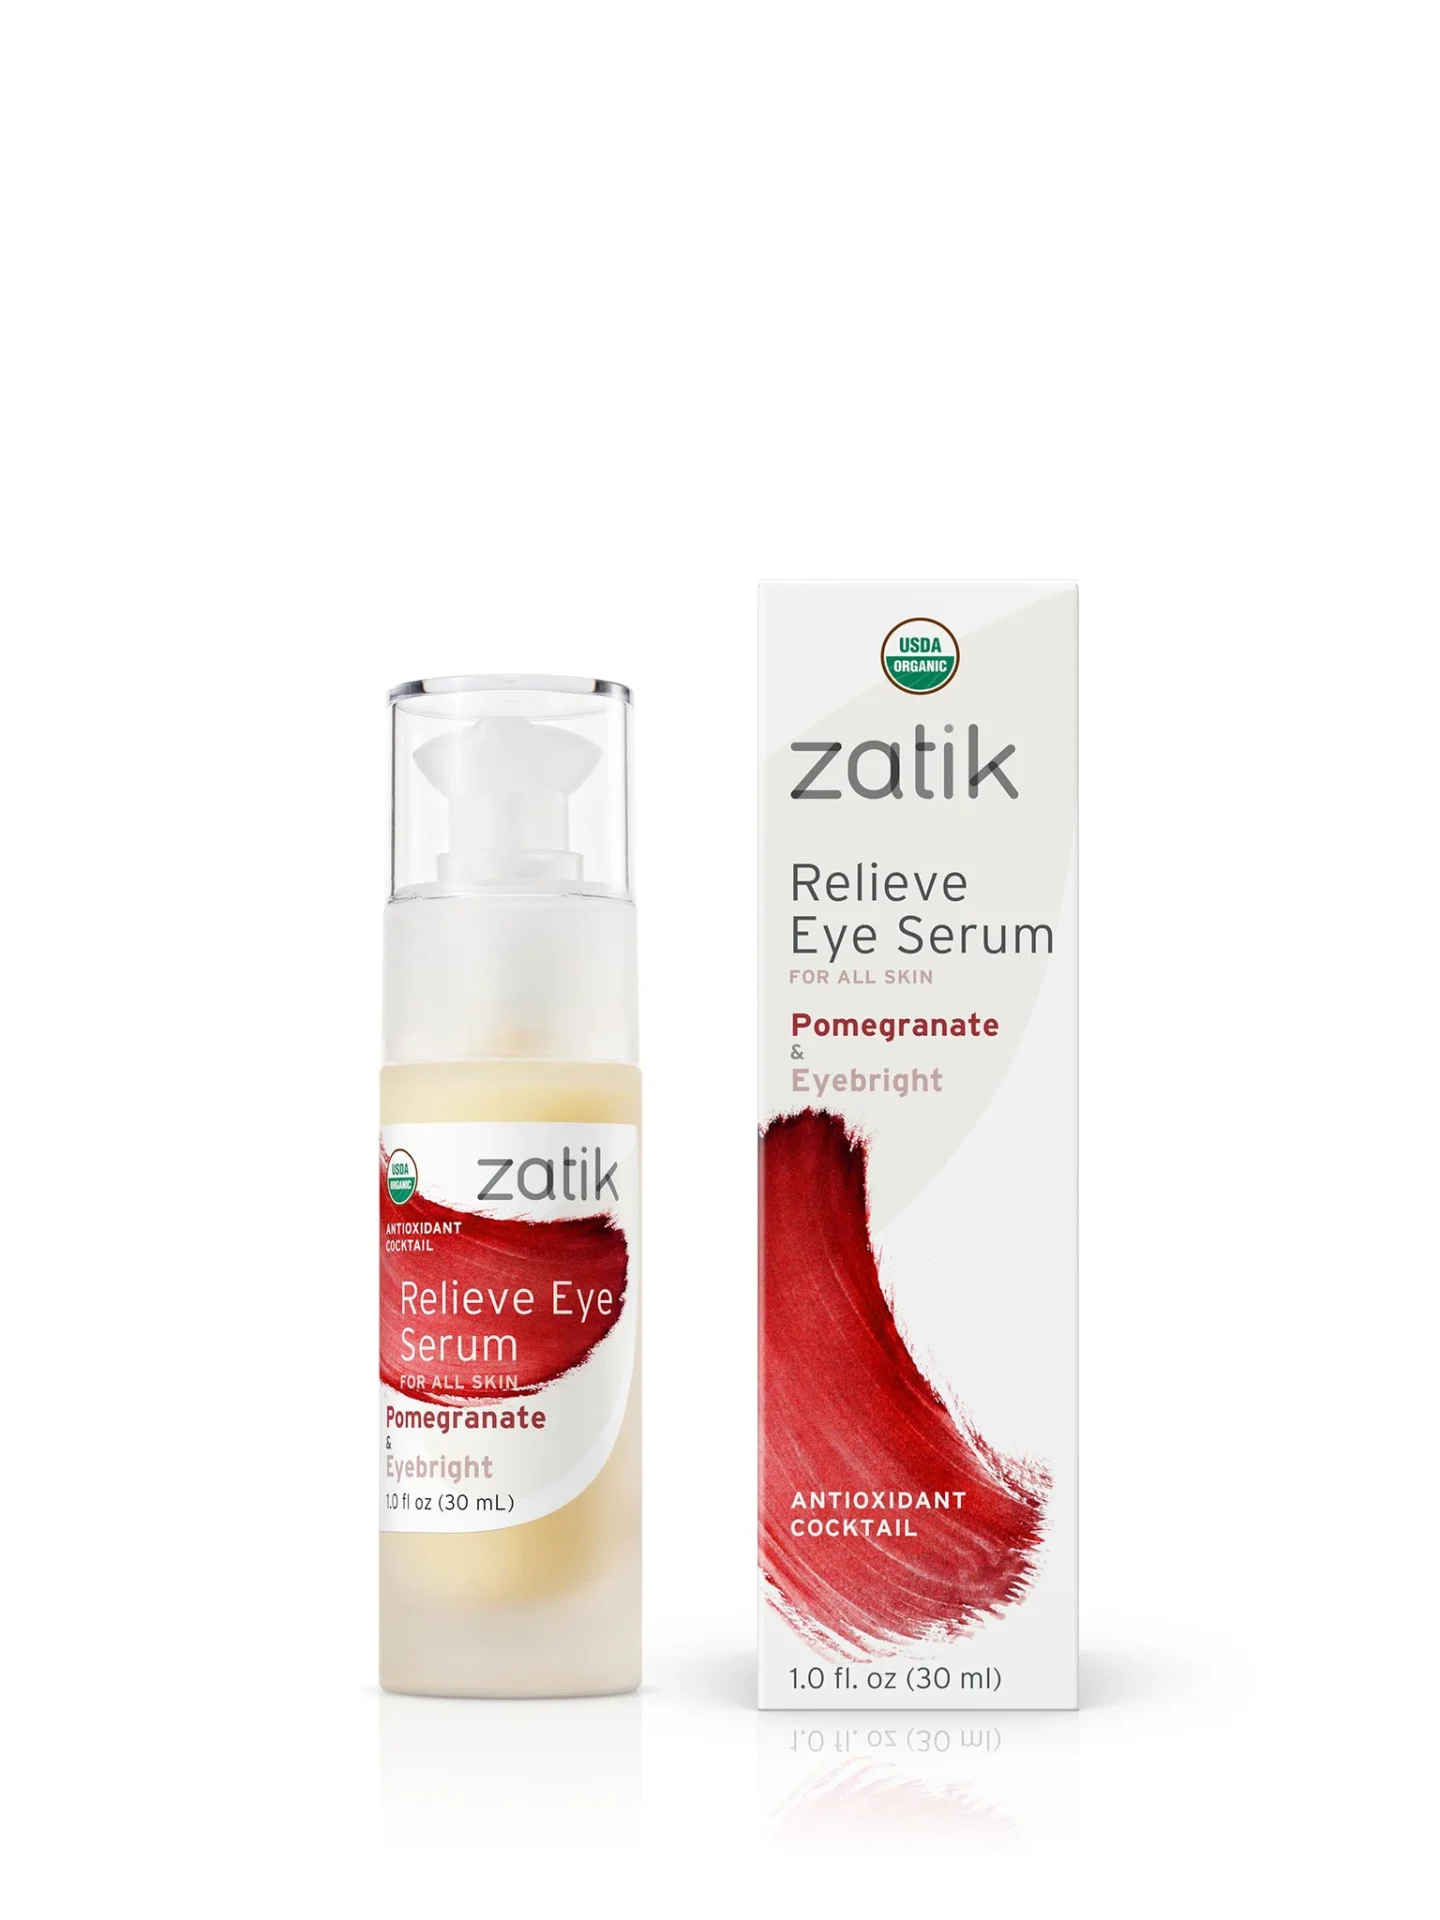 Zatik USDA Certified Organic Eye Serum